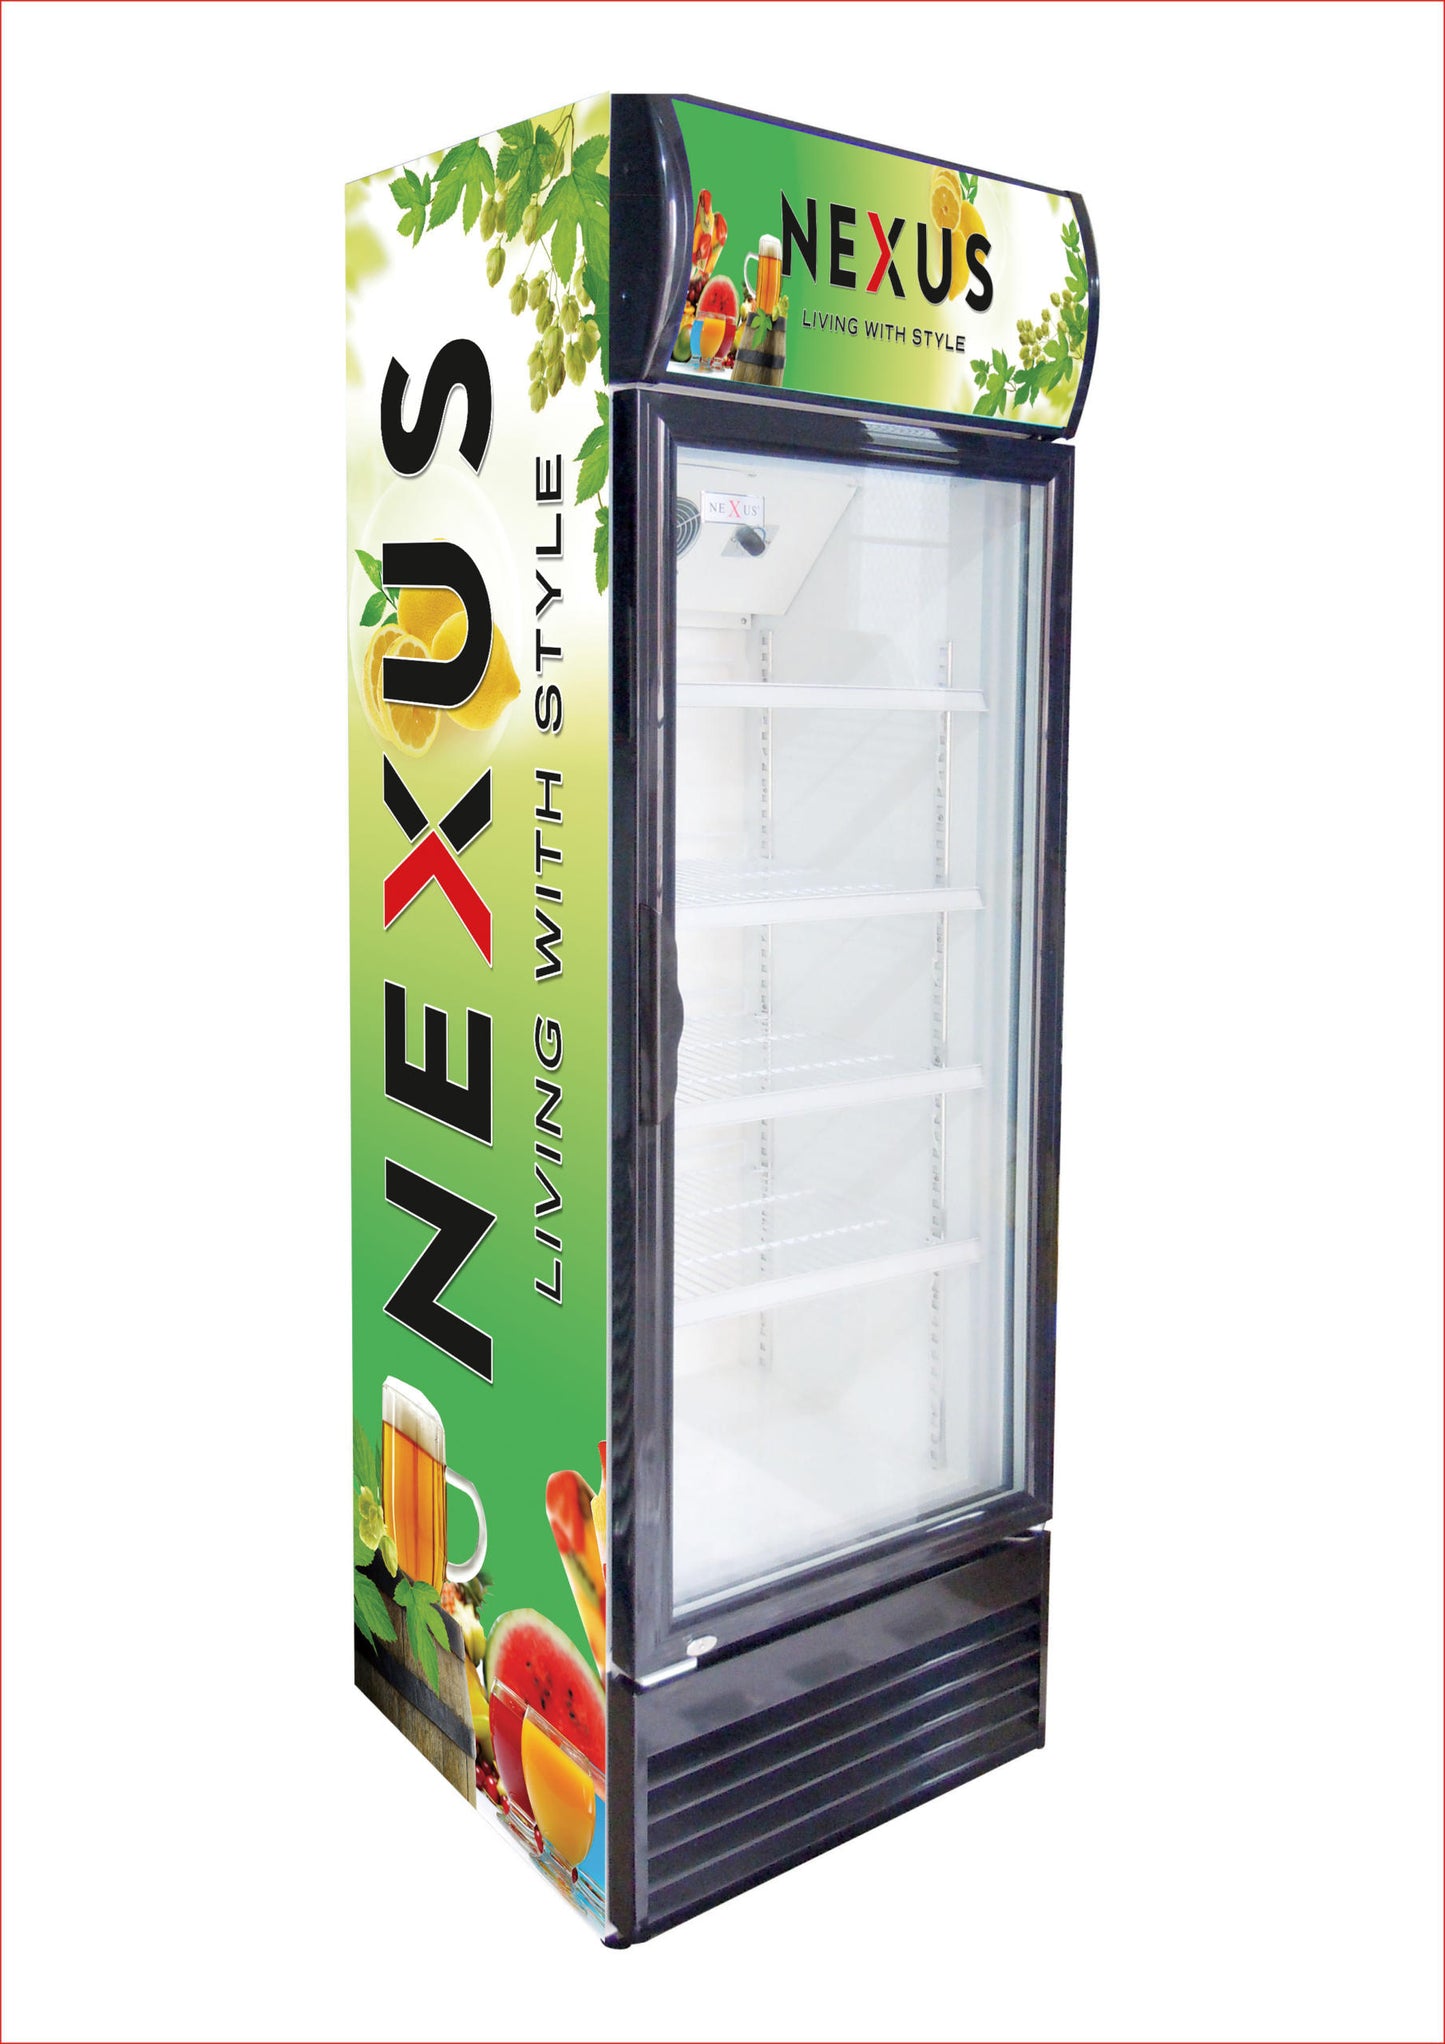 Nexus NX-551 300 Liters  Showcase Refrigerator